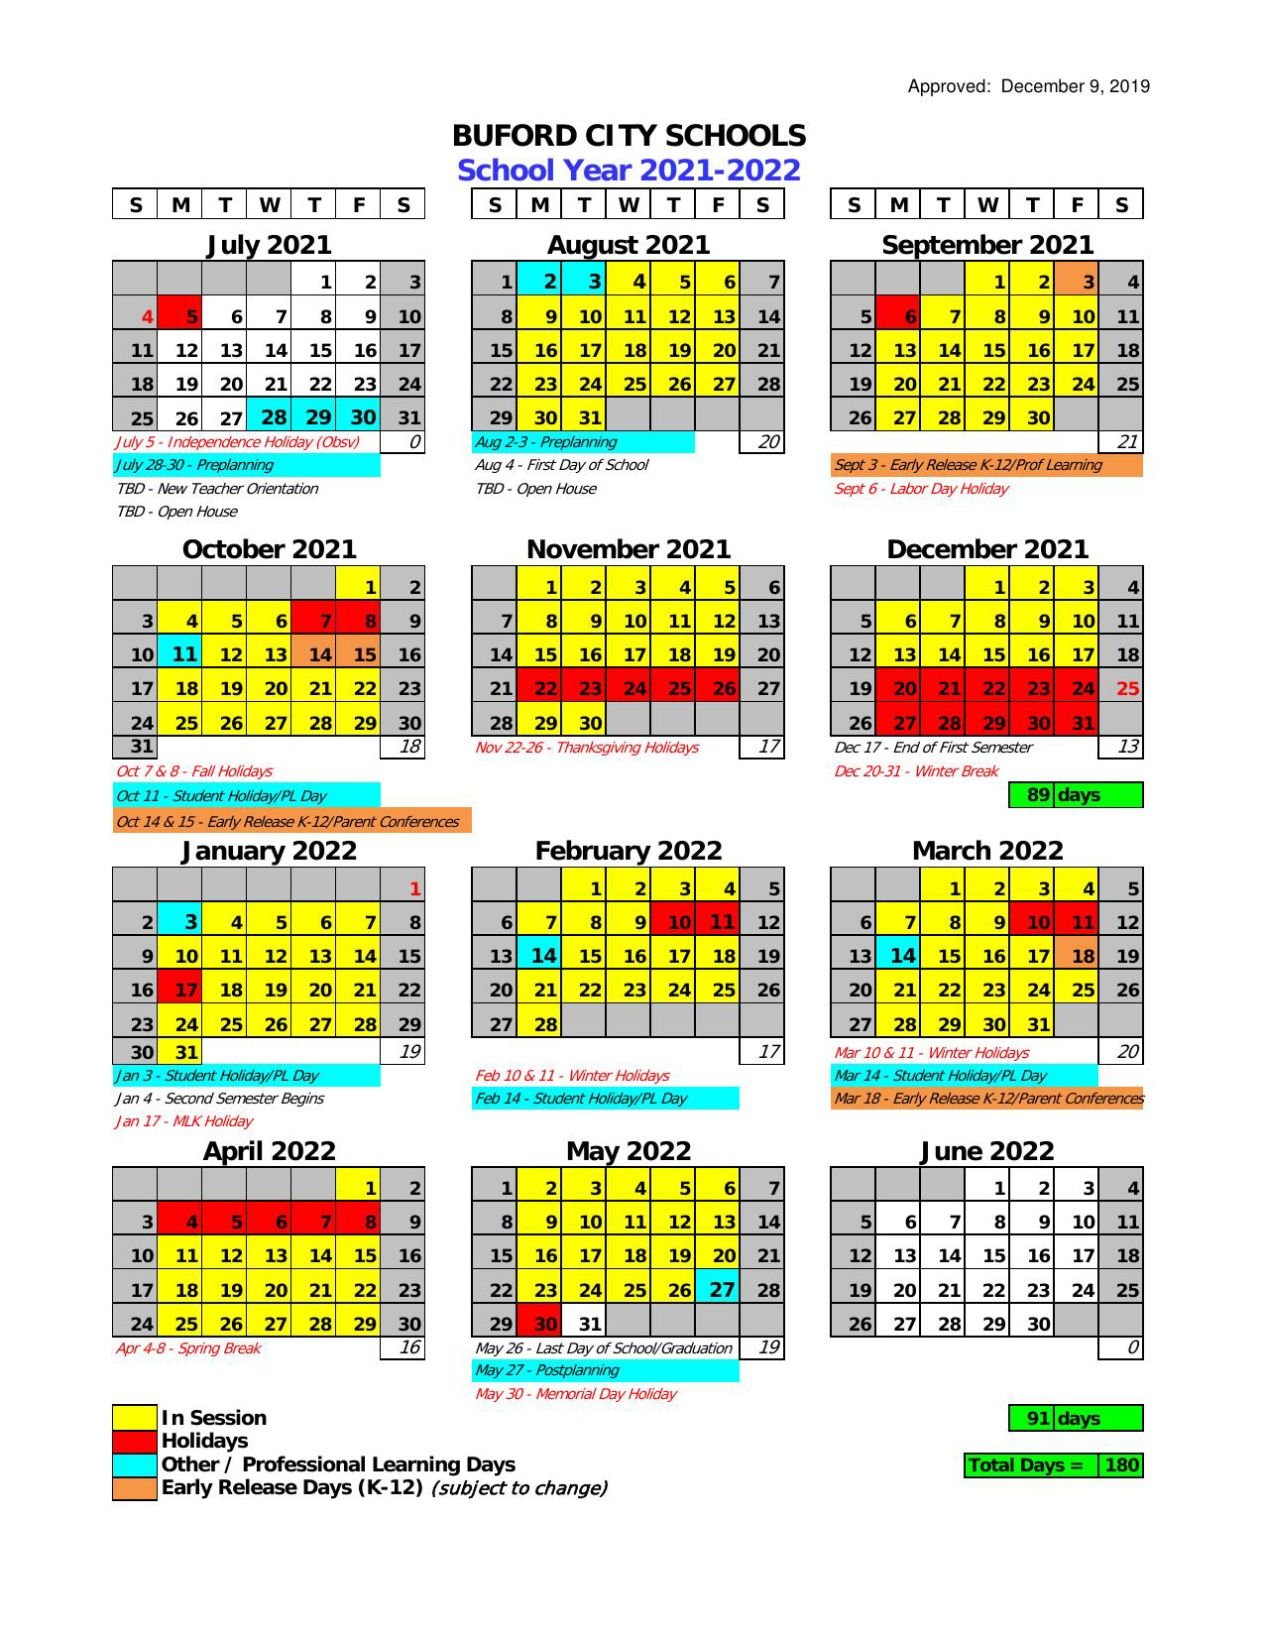 gwinnett-county-school-calendar-2019-2020